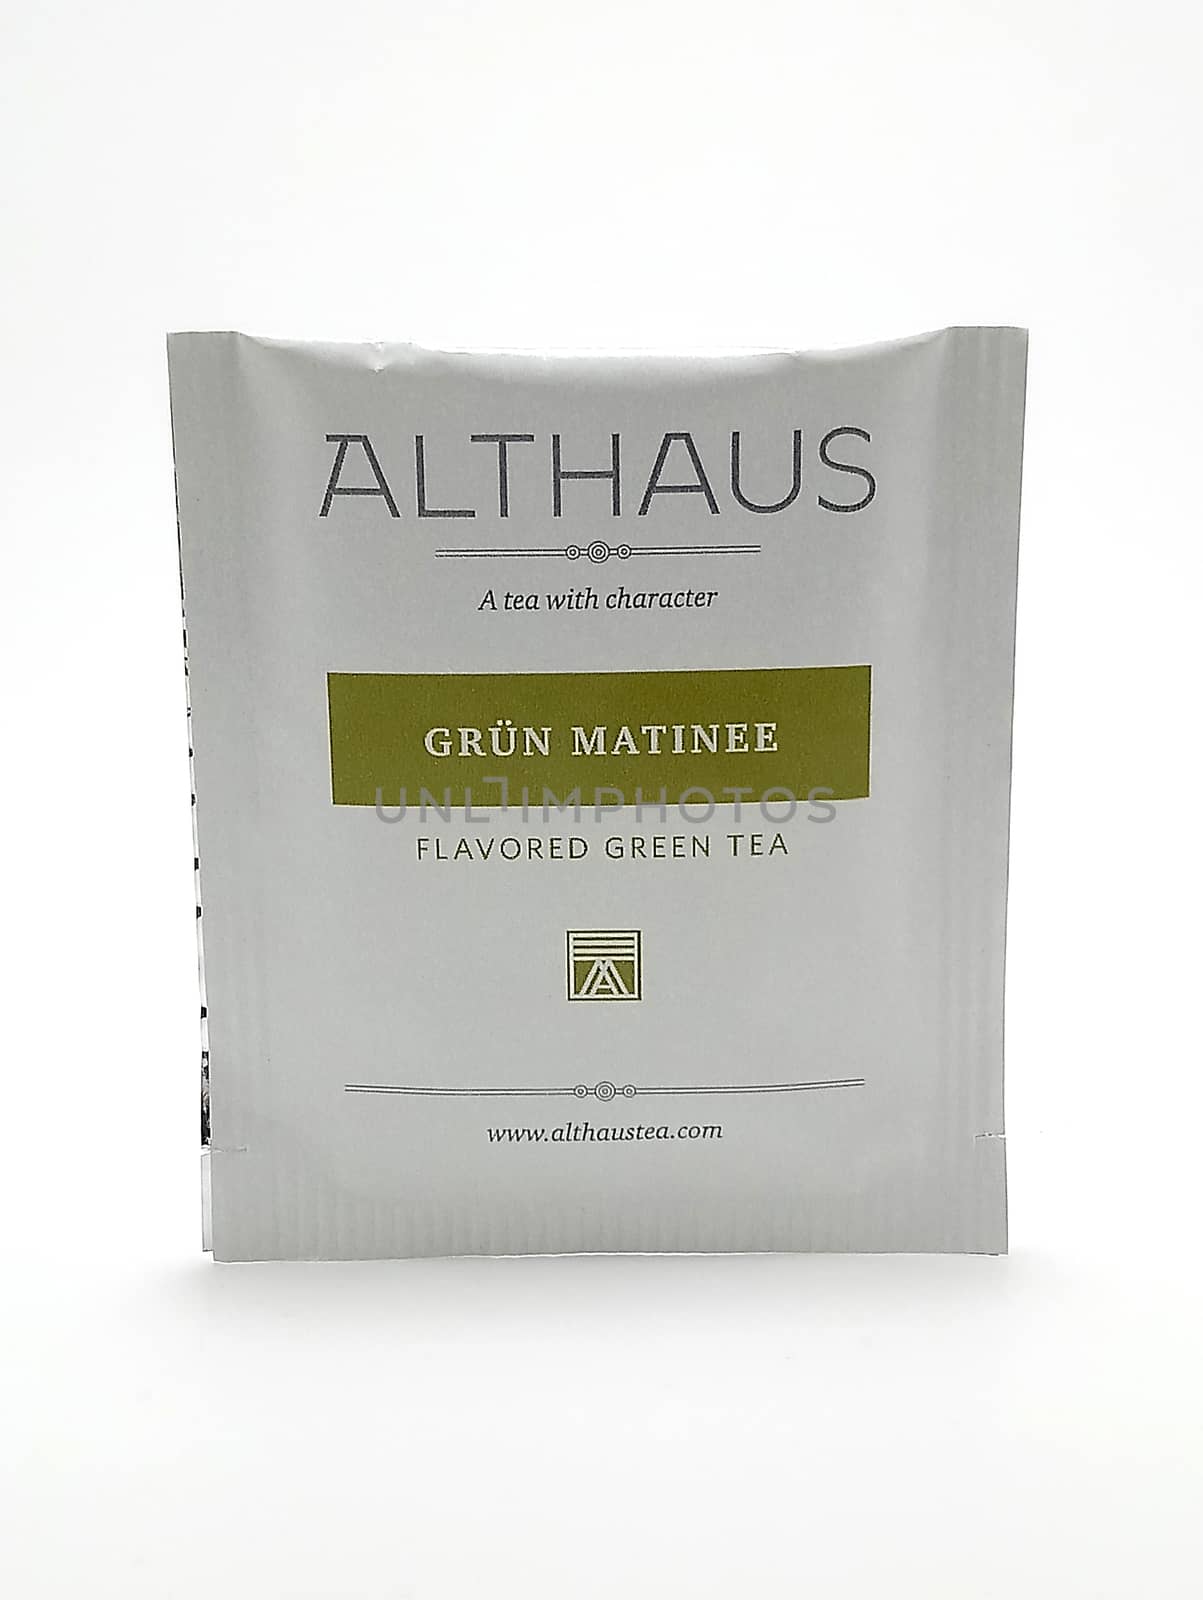 Althaus Grun Matinee green tea in Manila, Philippines by imwaltersy